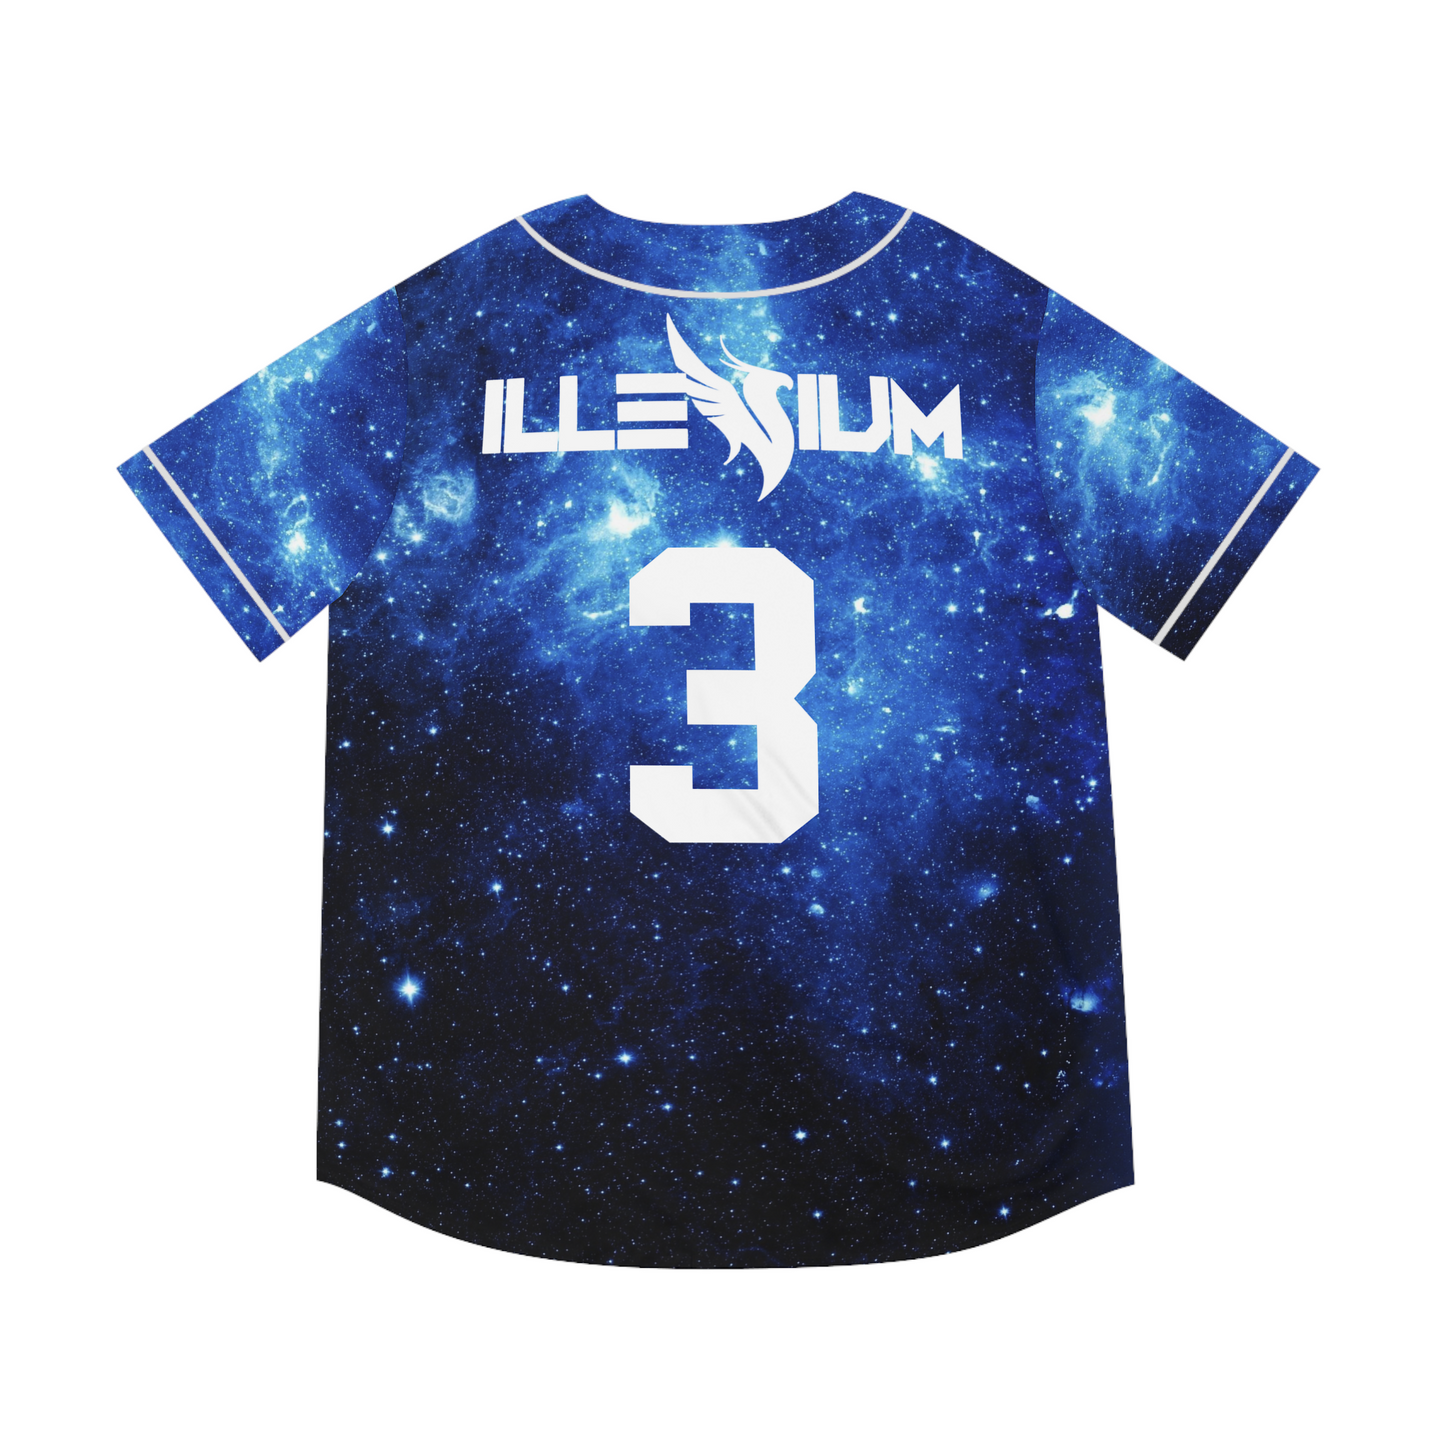 Illenium Jersey (Blue/Black Star)